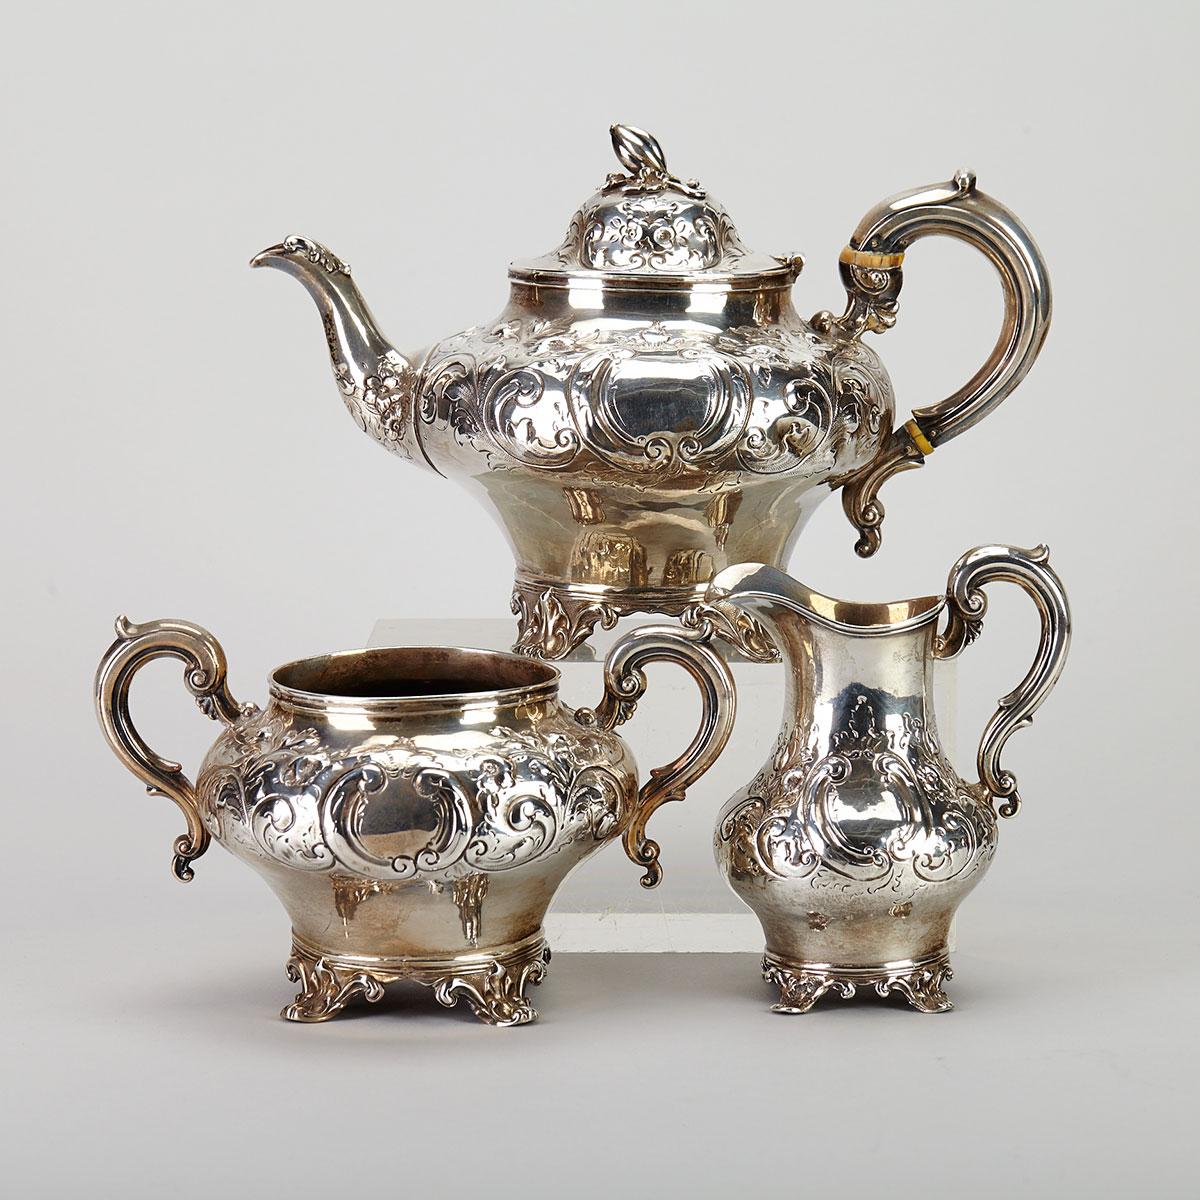 Victorian Silver Tea Service, Henry Holland, London, 1855